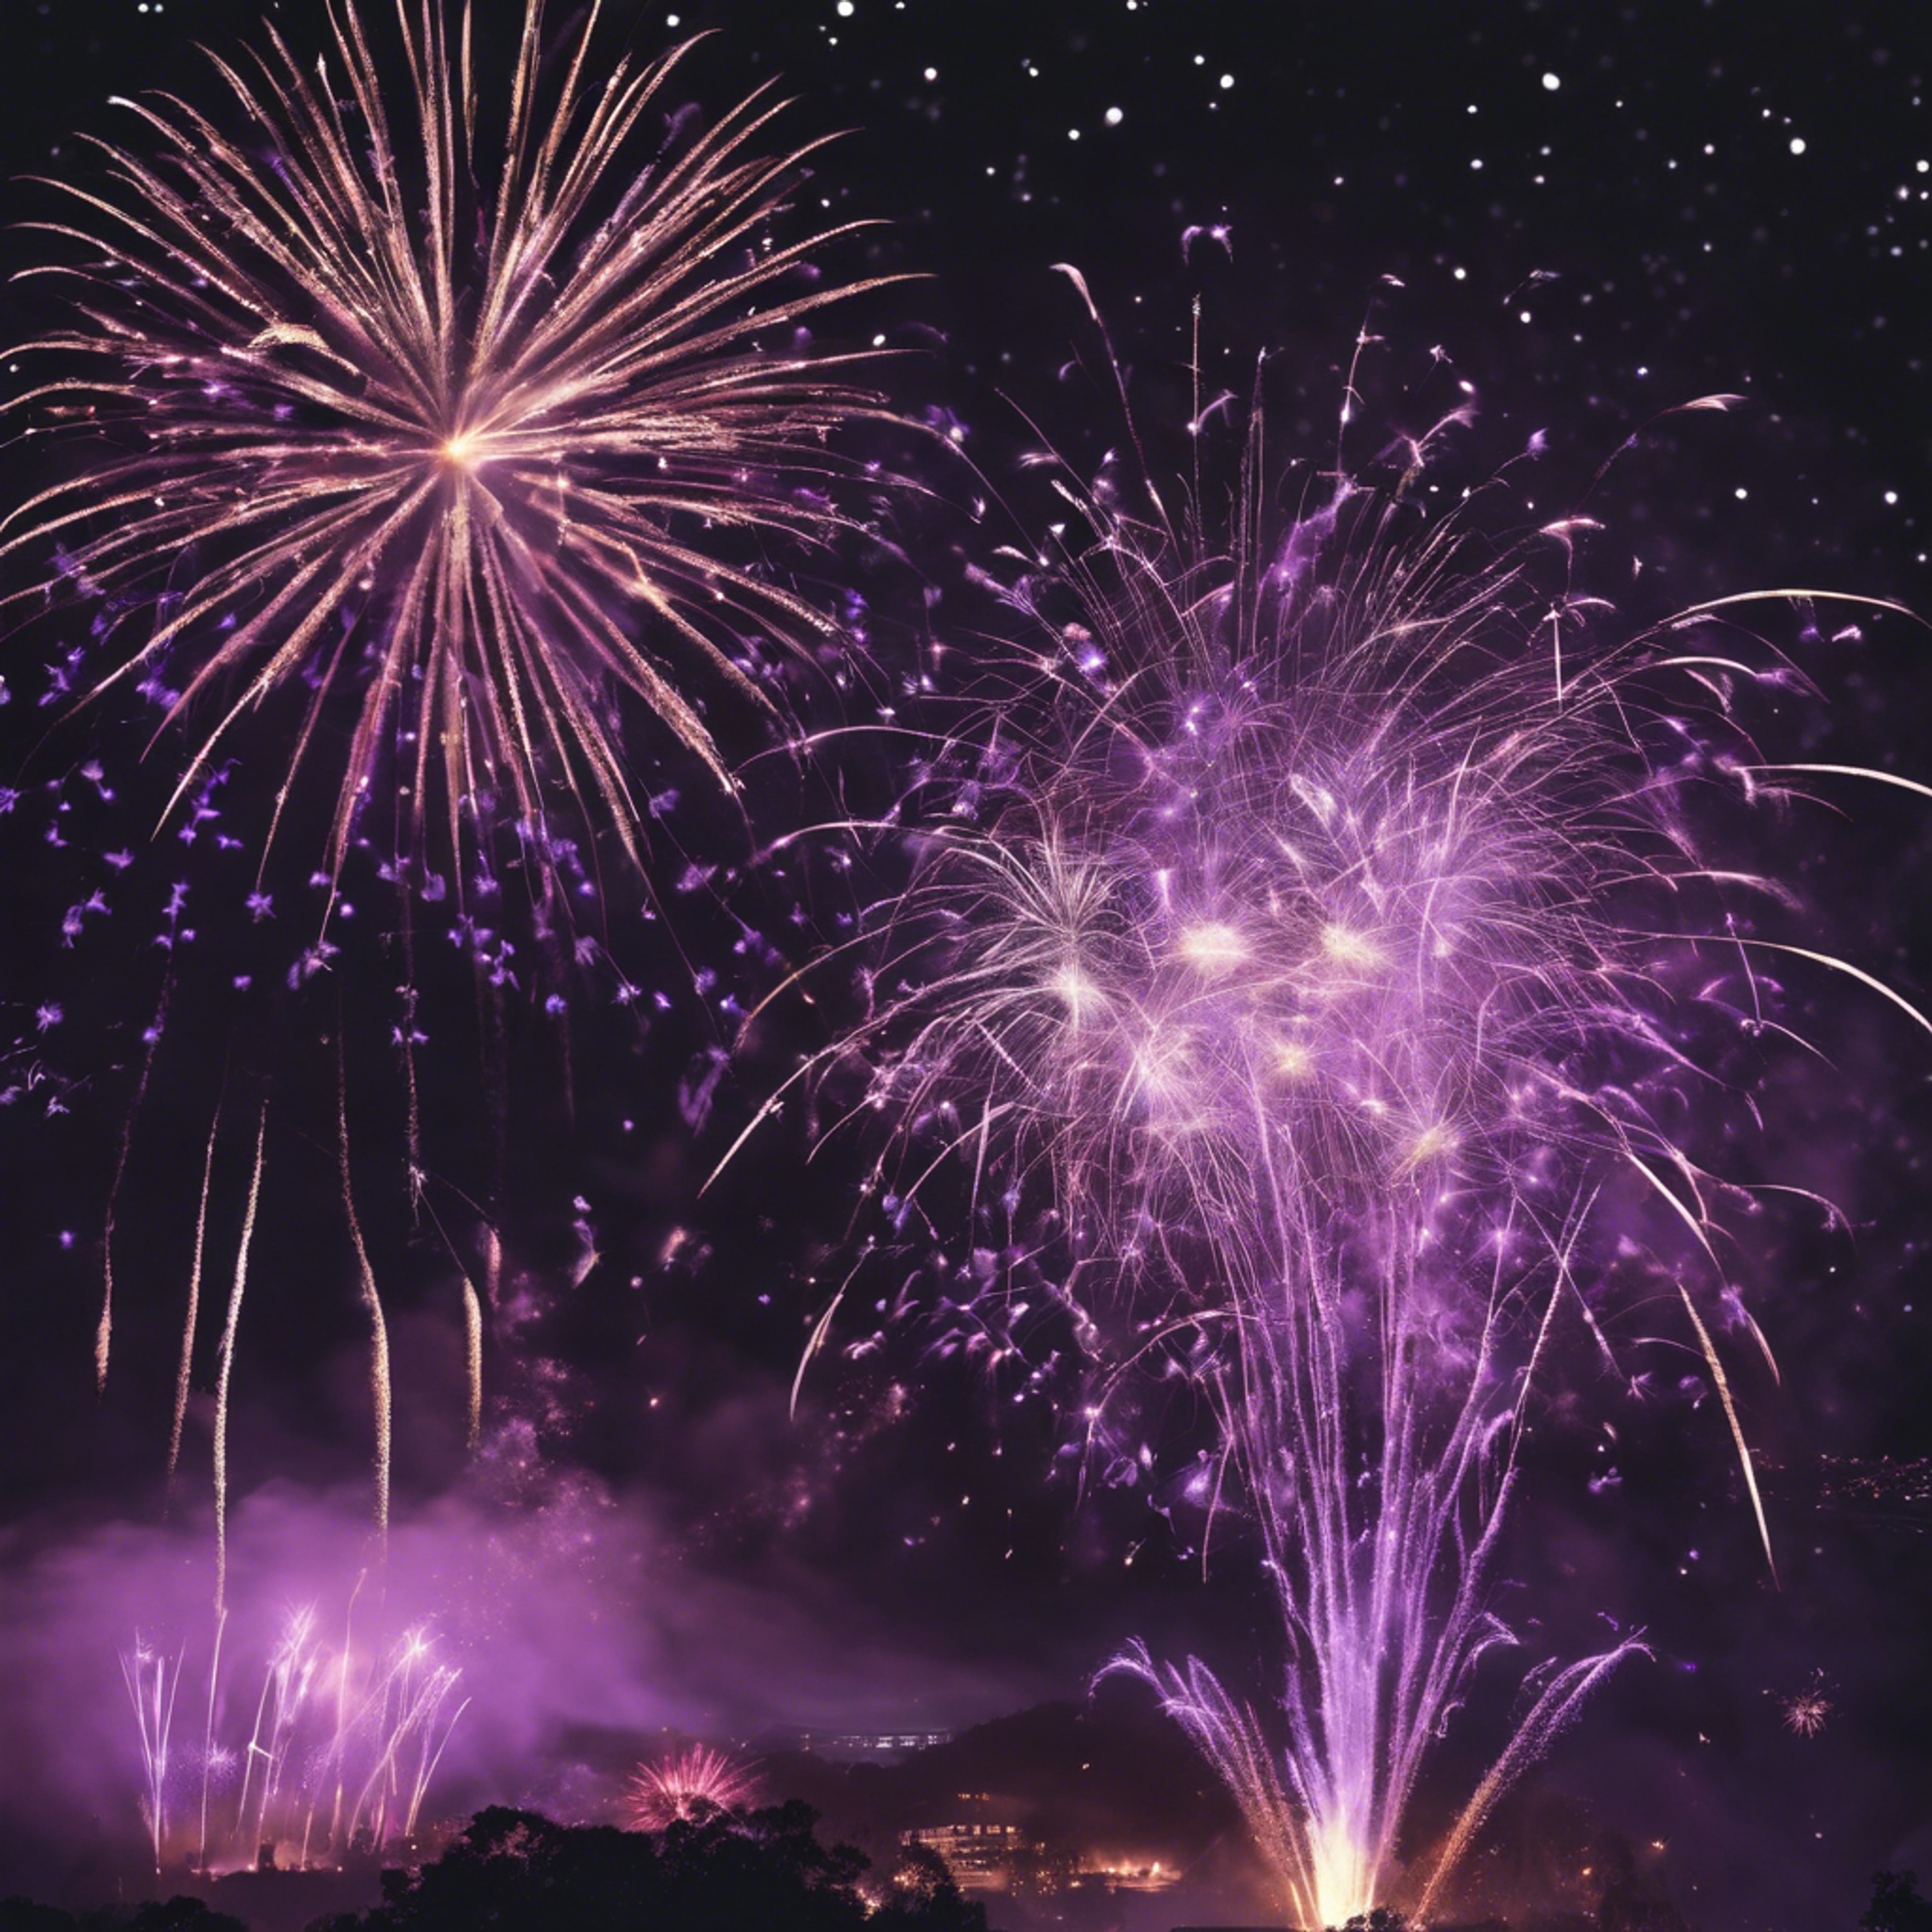 Black and purple fireworks lighting up the night sky during a grand celebration. 墙纸[a63540e6fc8e4a549ec0]